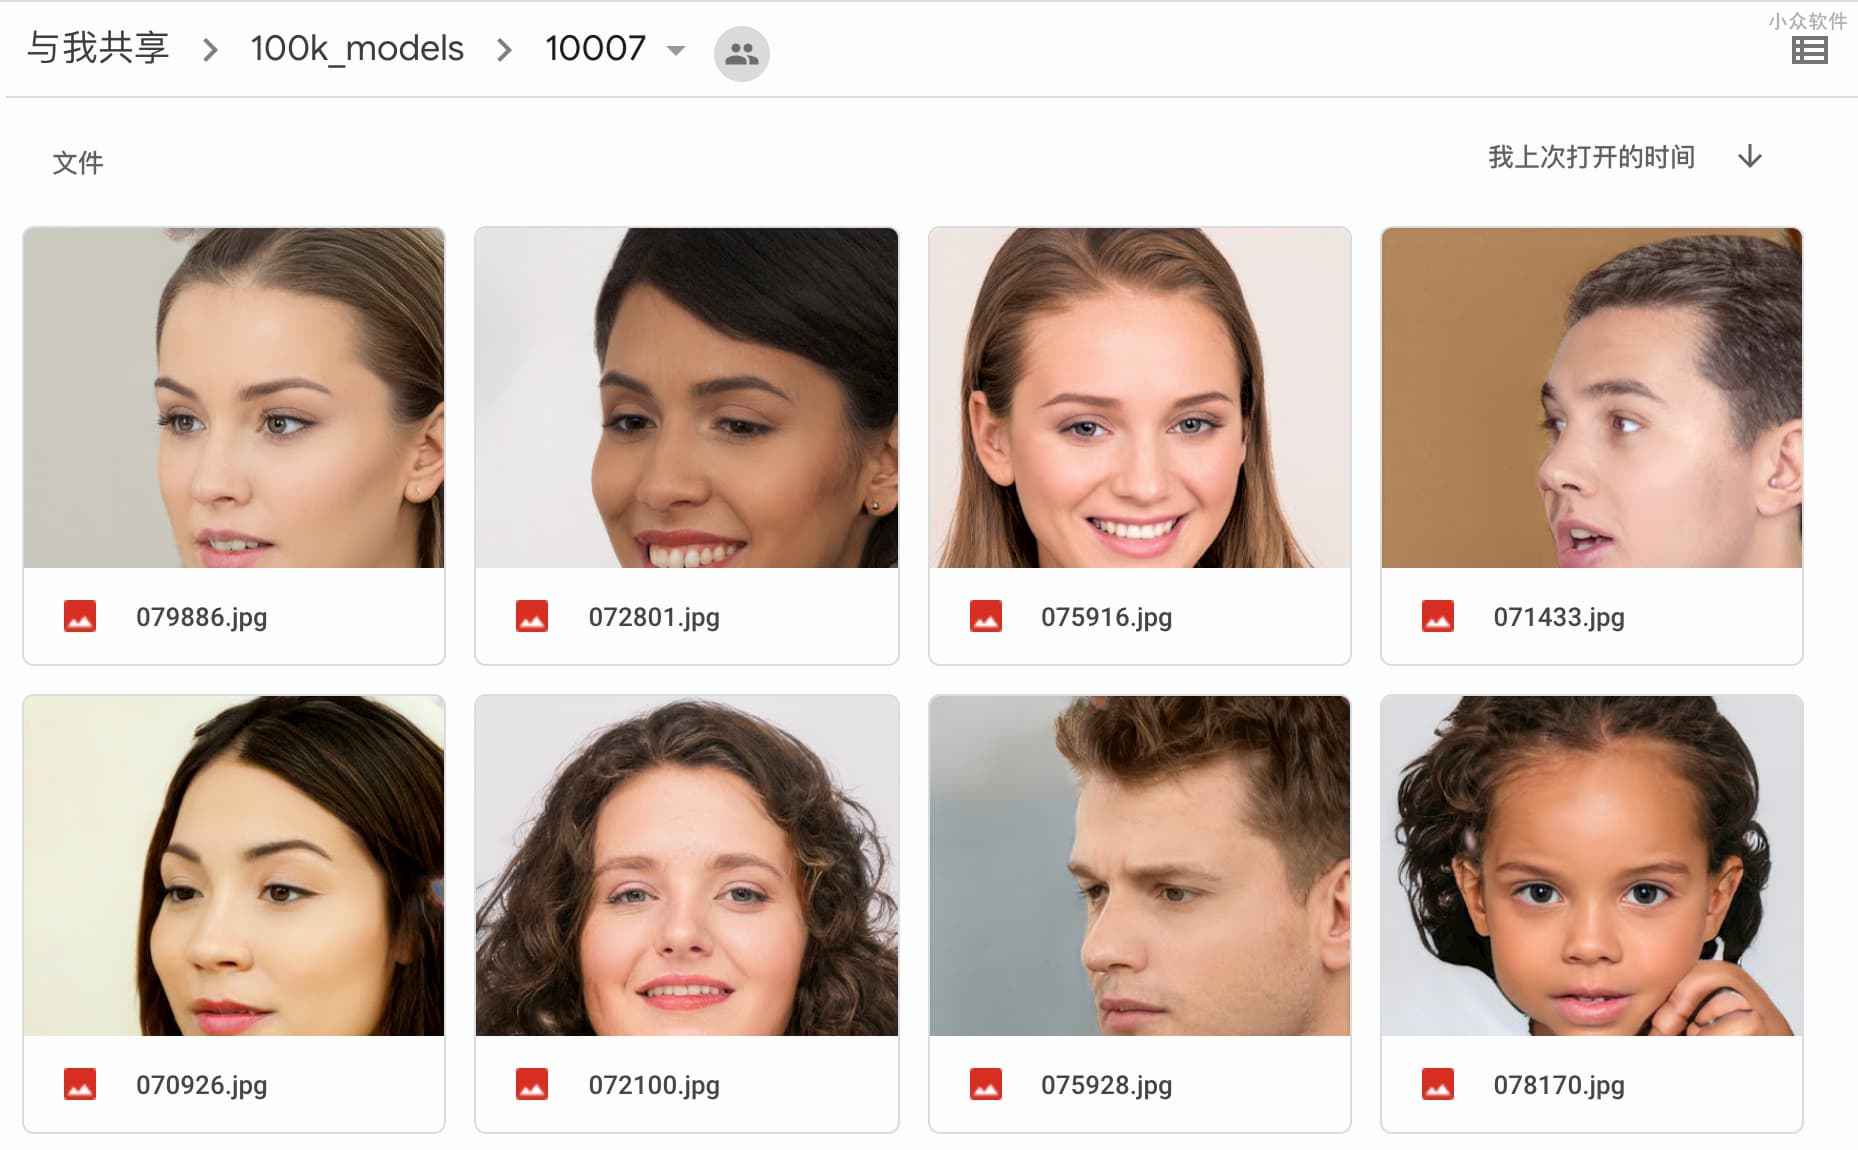 100,000 Faces - 10万张不要肖像权的人脸照片，随便用 3